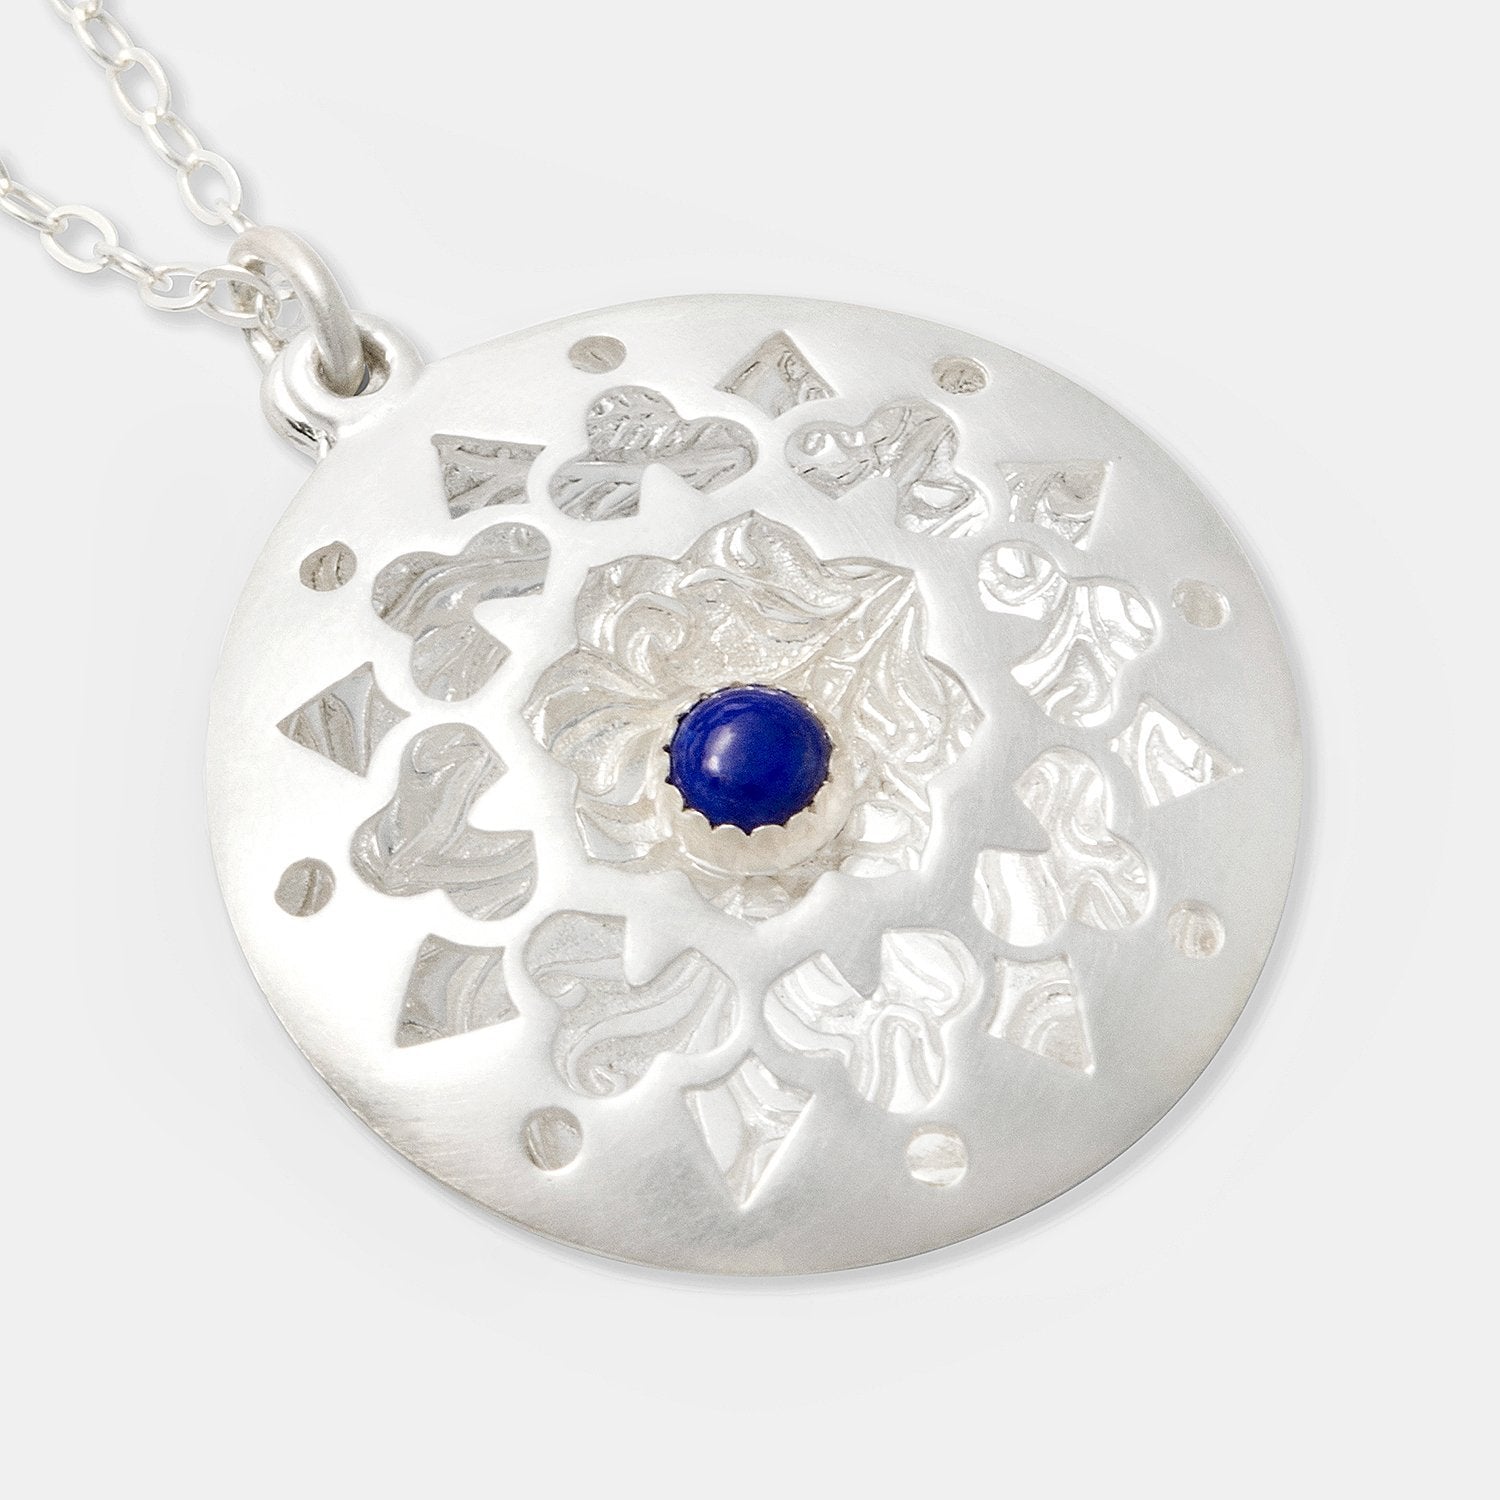 Mandala pendant with lapis lazuli - Simone Walsh Jewellery Australia